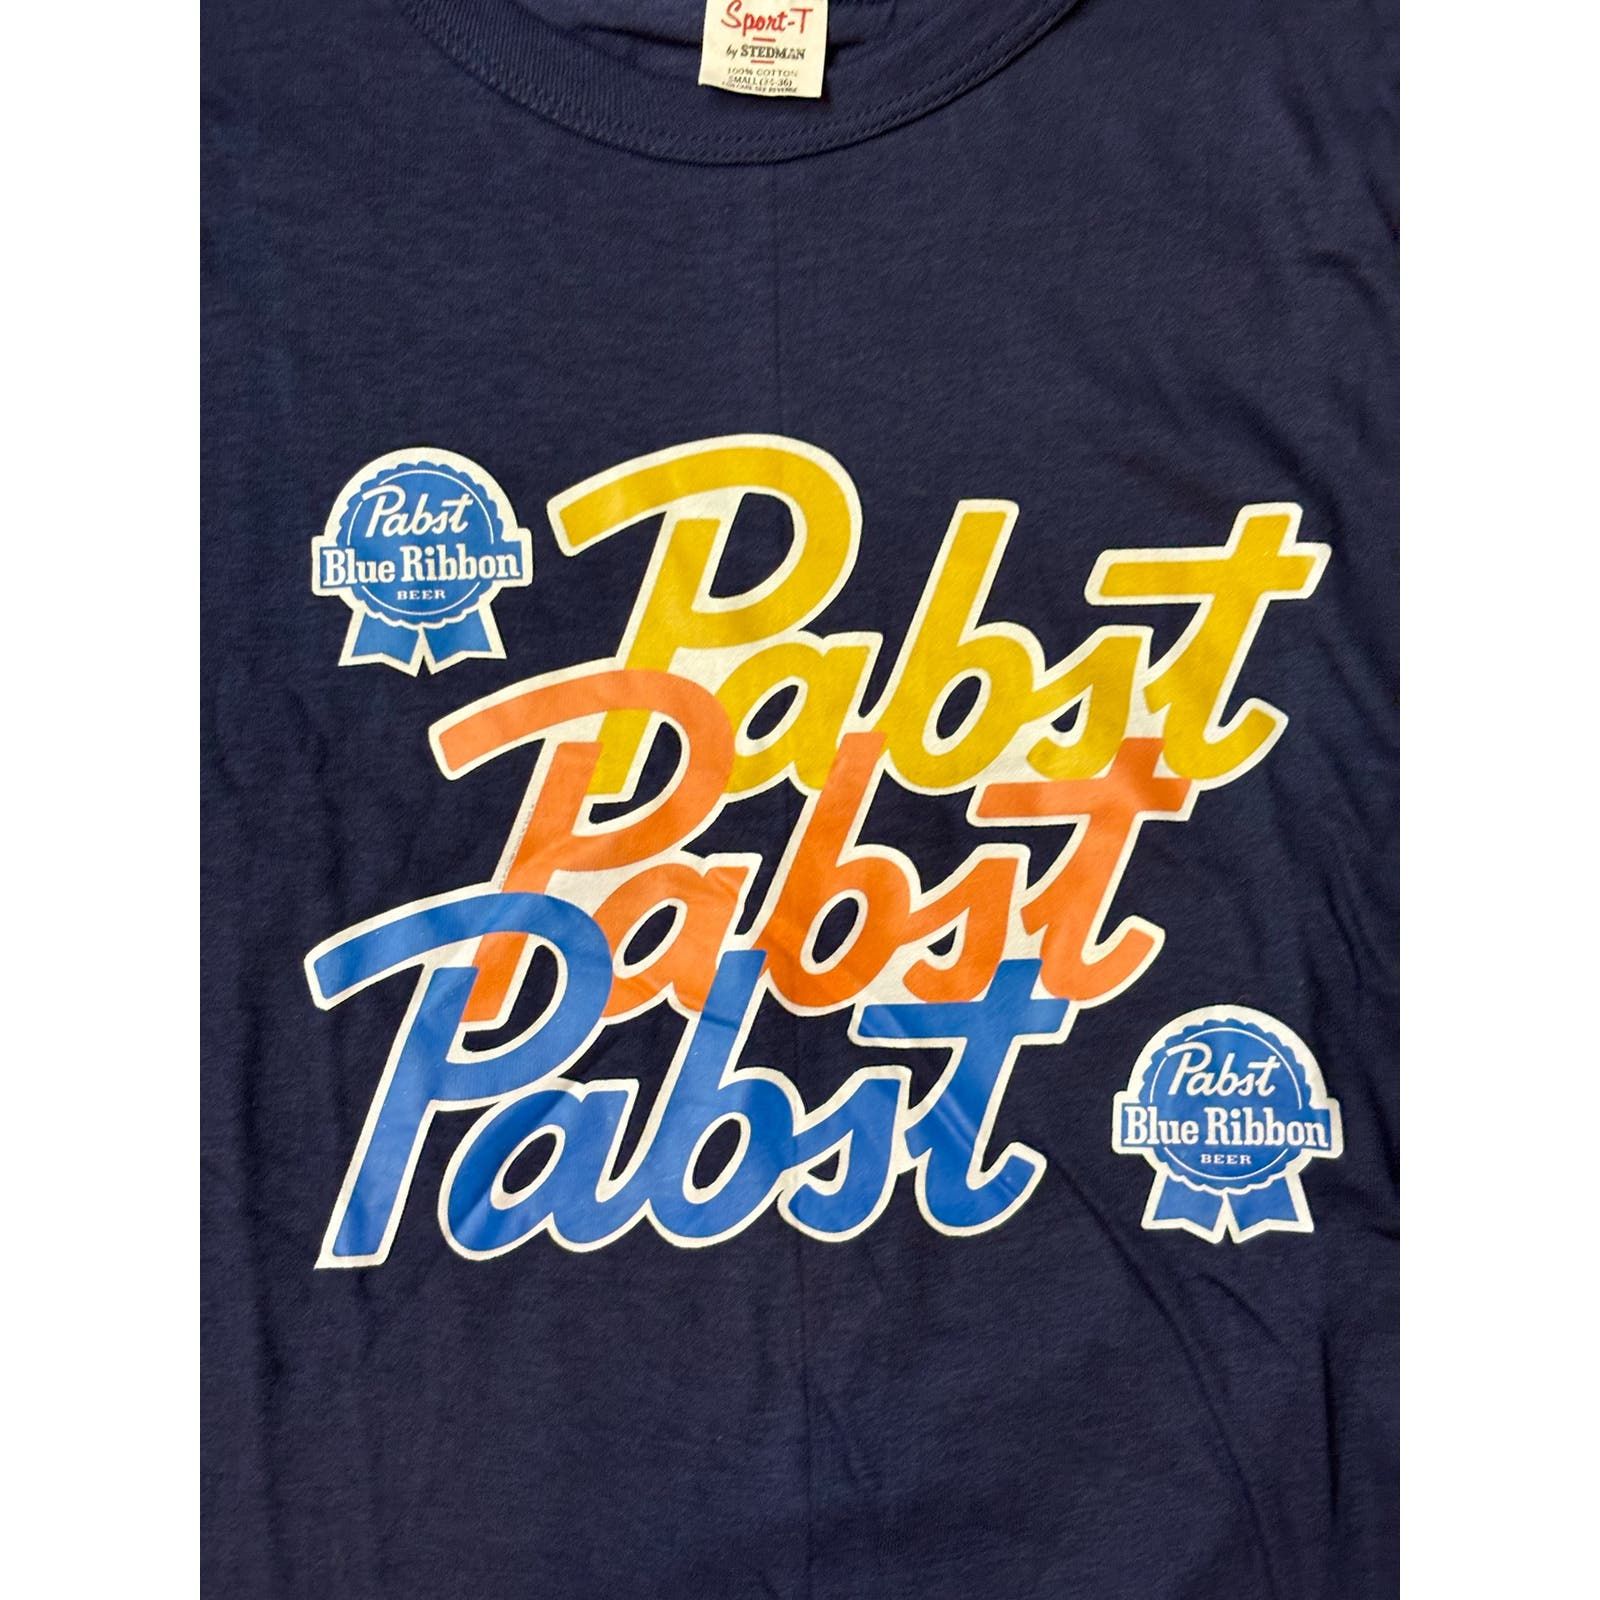 Vintage Vintage 1980's Pabst Blue Ribbon beer shirt Size US S / EU 44-46 / 1 - 1 Preview